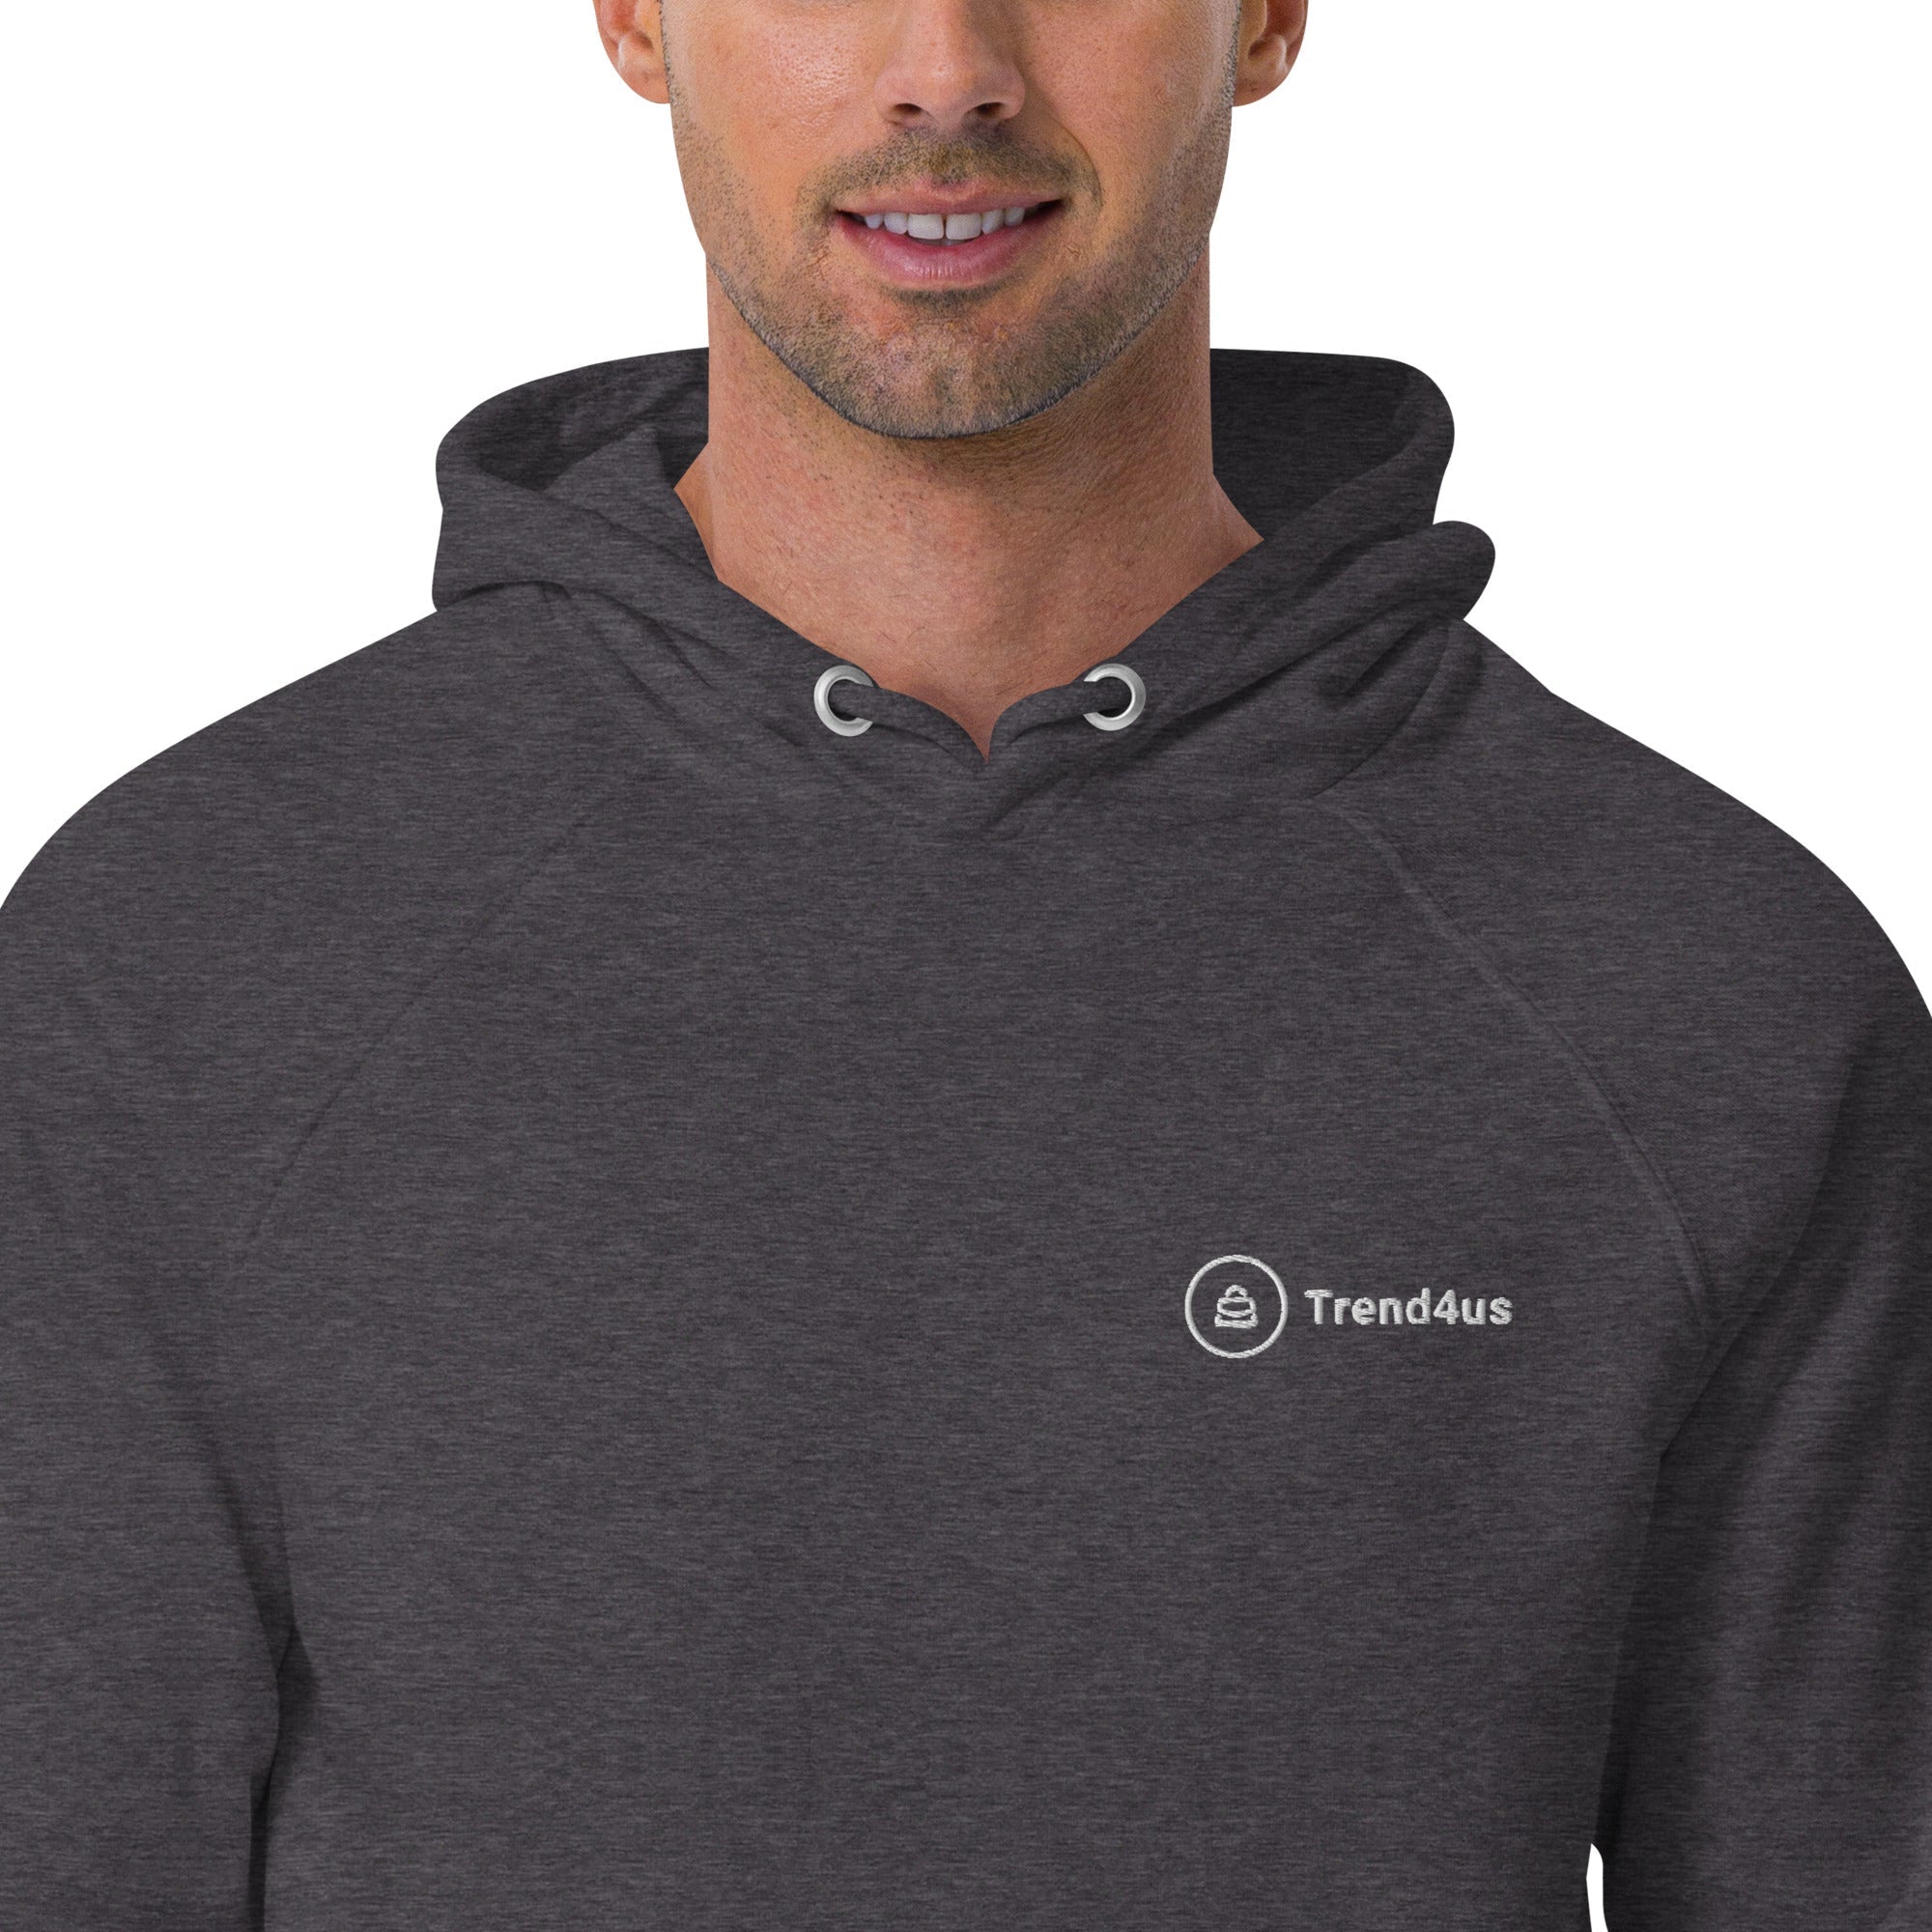 Unisex Eco-Friendly hoodie